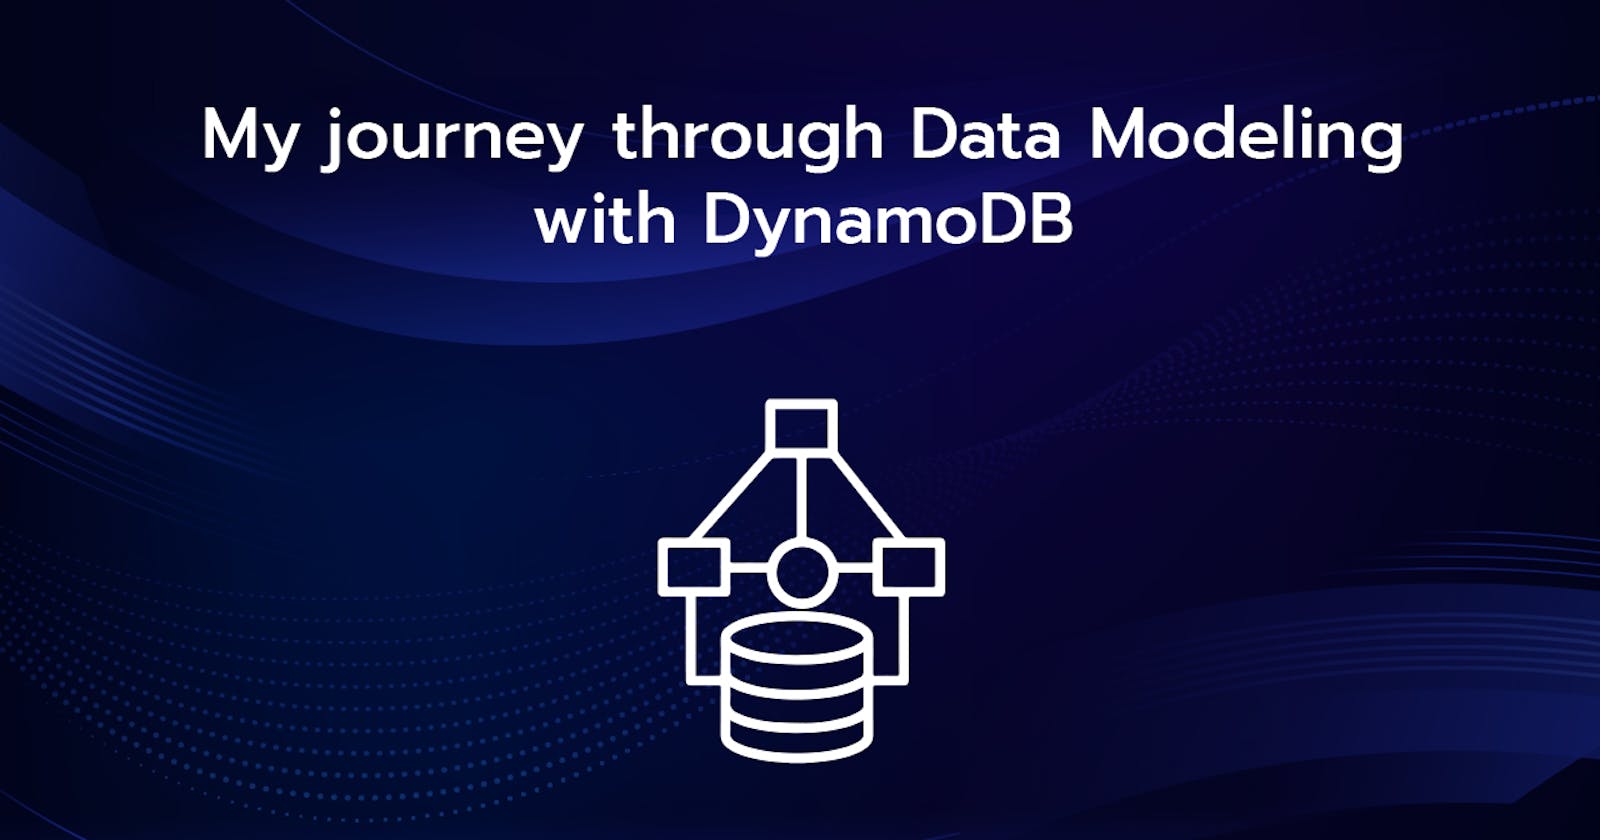 My journey through Data Modeling with DynamoDB